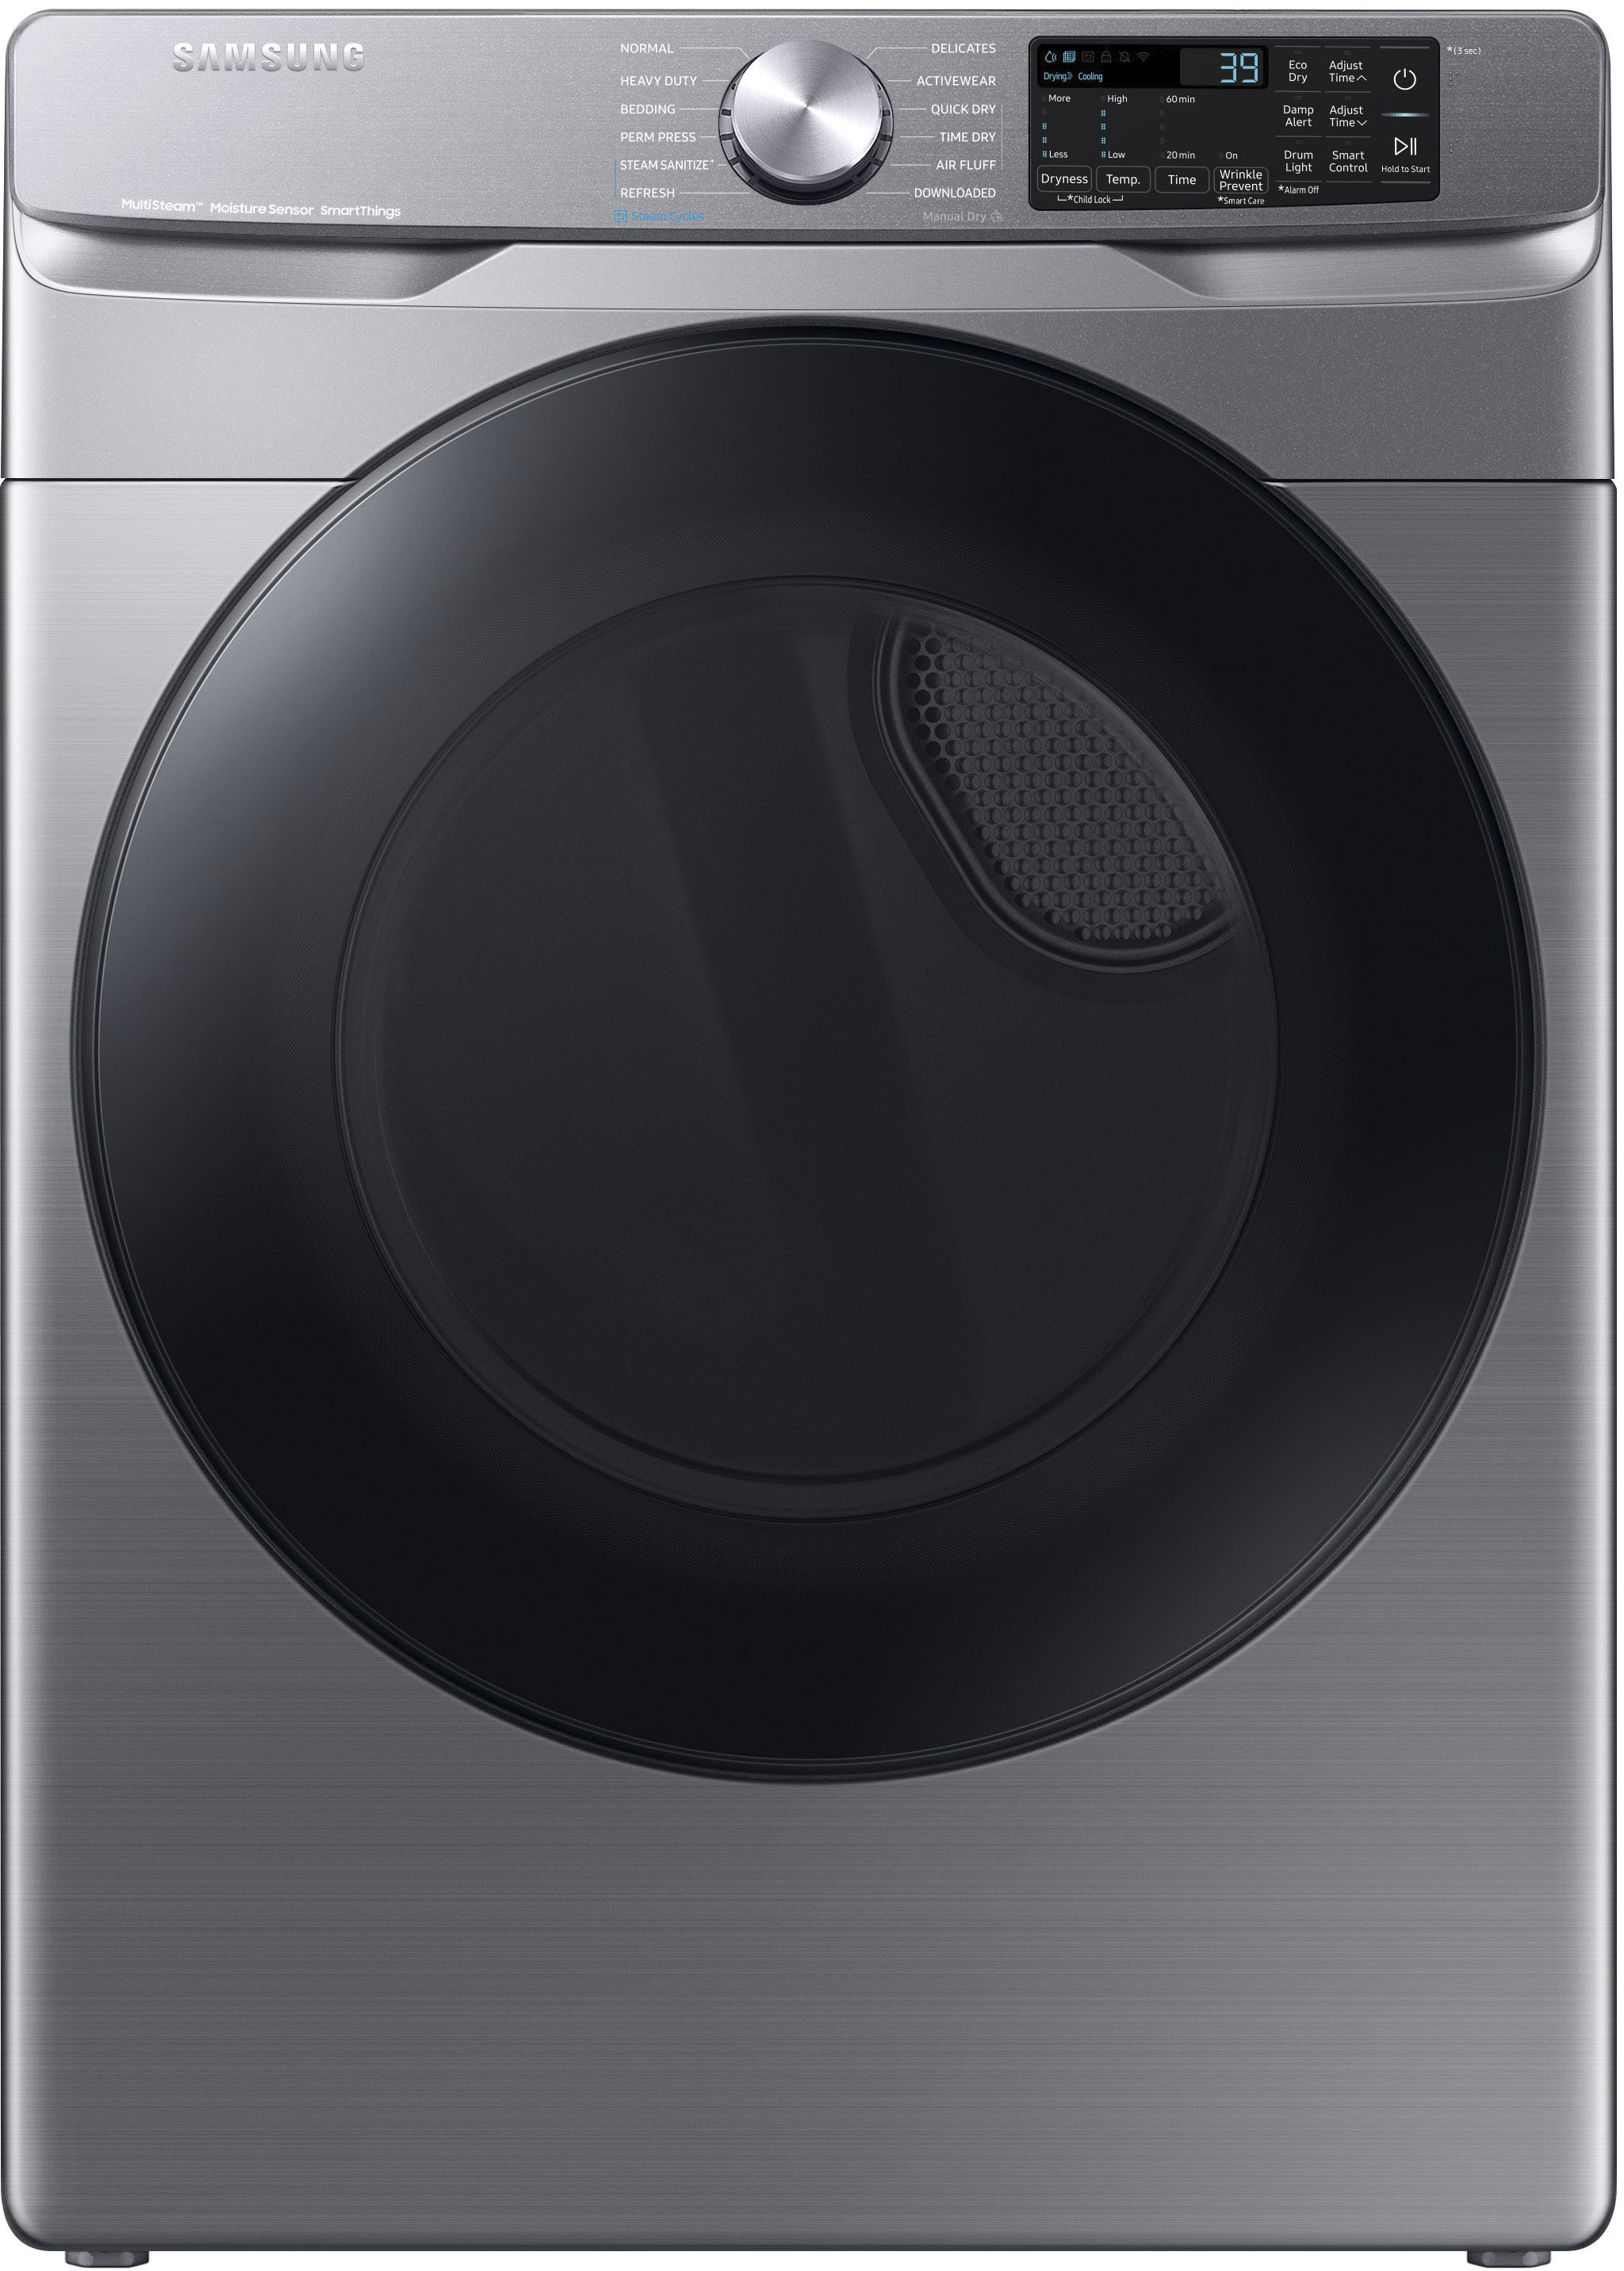 27 Pedestal (2019) Home Appliances Accessories - WE402NC/A3